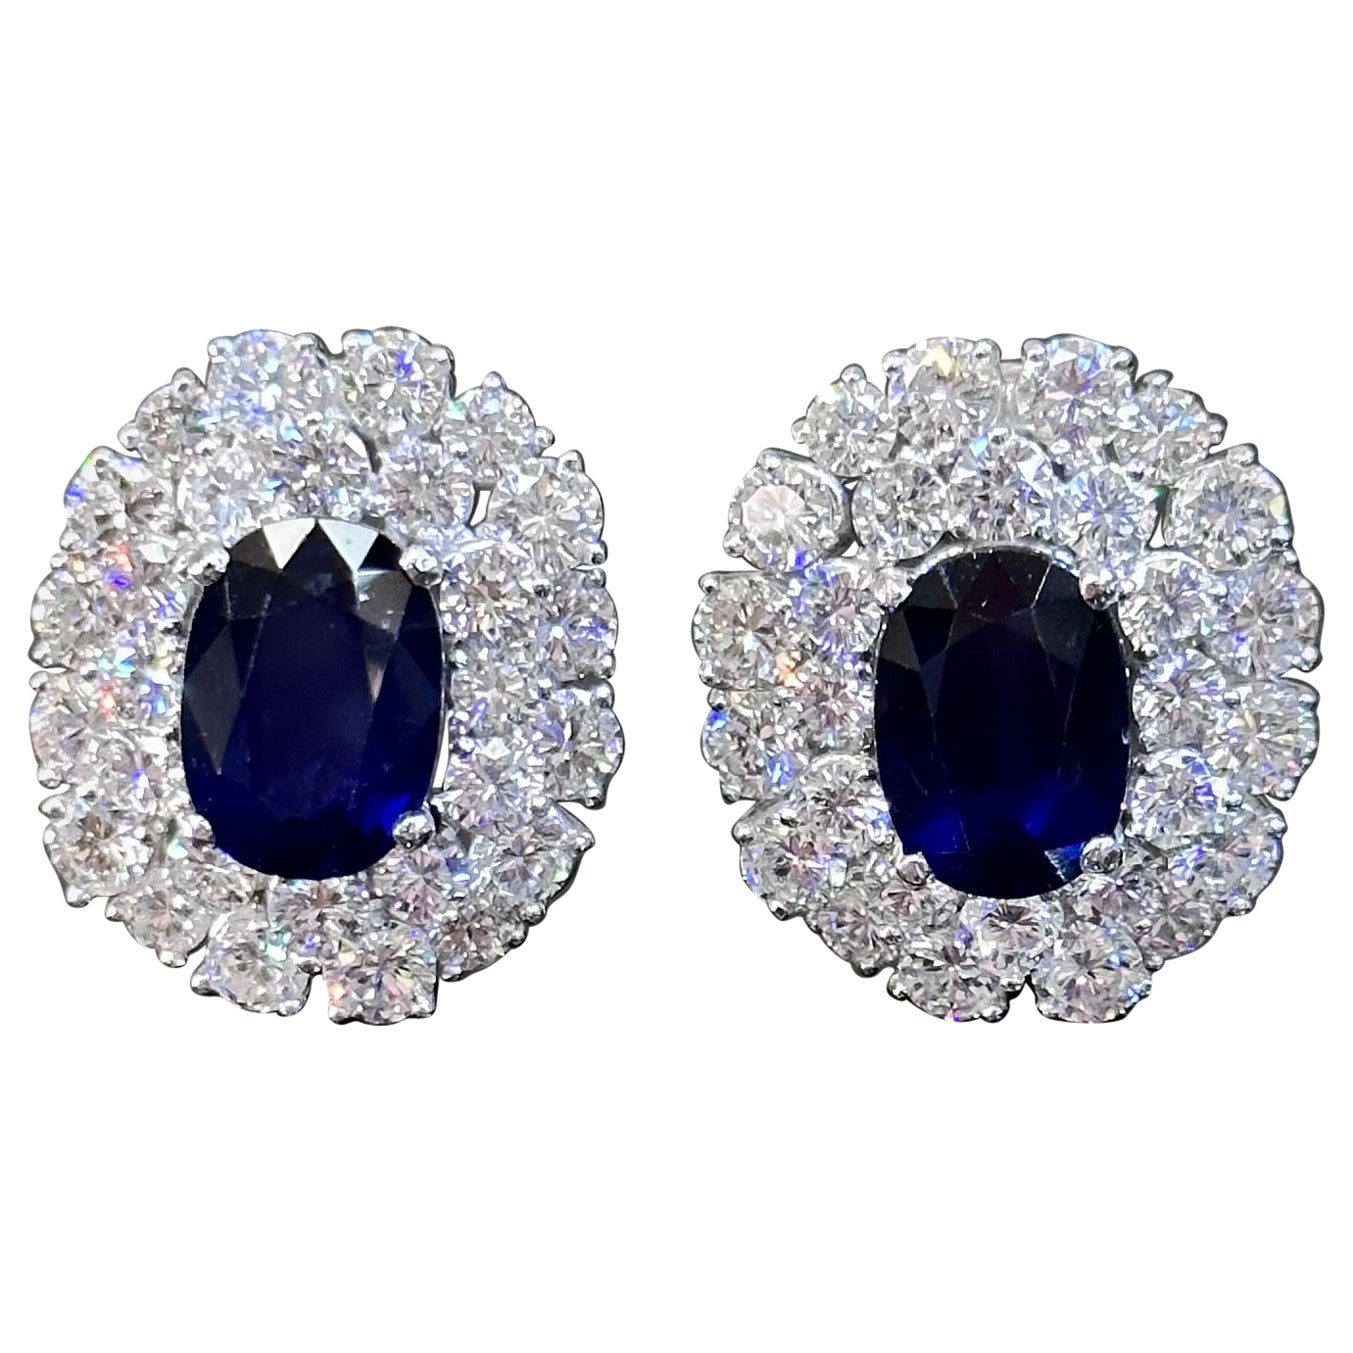 1950s/1960s Royal Blue Sapphire Diamond Cluster Earrings Platinum Gold French